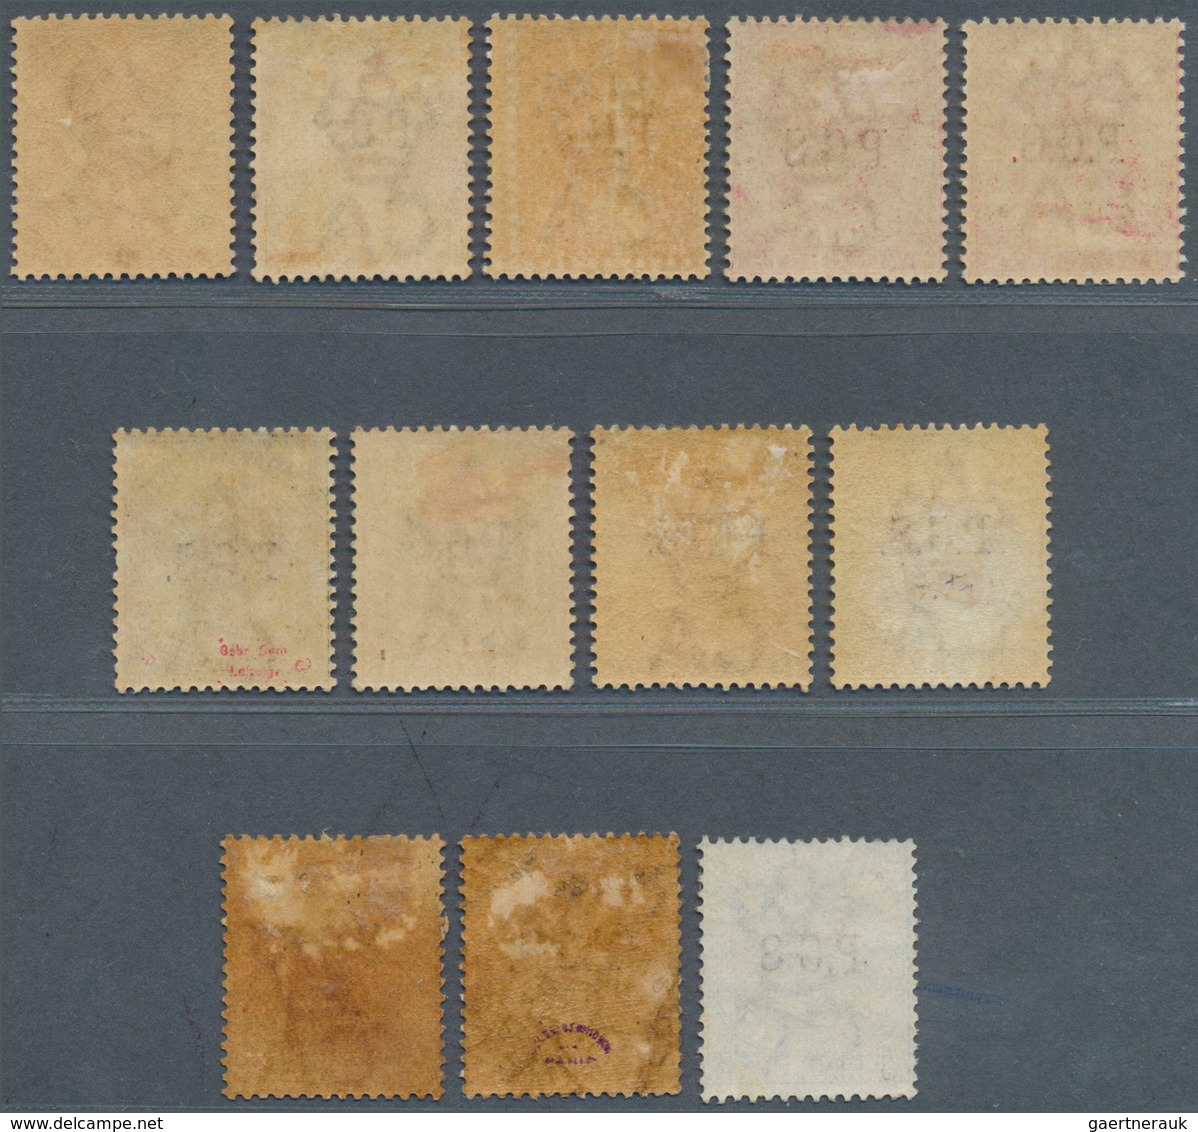 06825 Malaiische Staaten - Perak-Dienstmarken: 1889 Set Of Eight Different Singles, Plus Four Stamps Showi - Perak